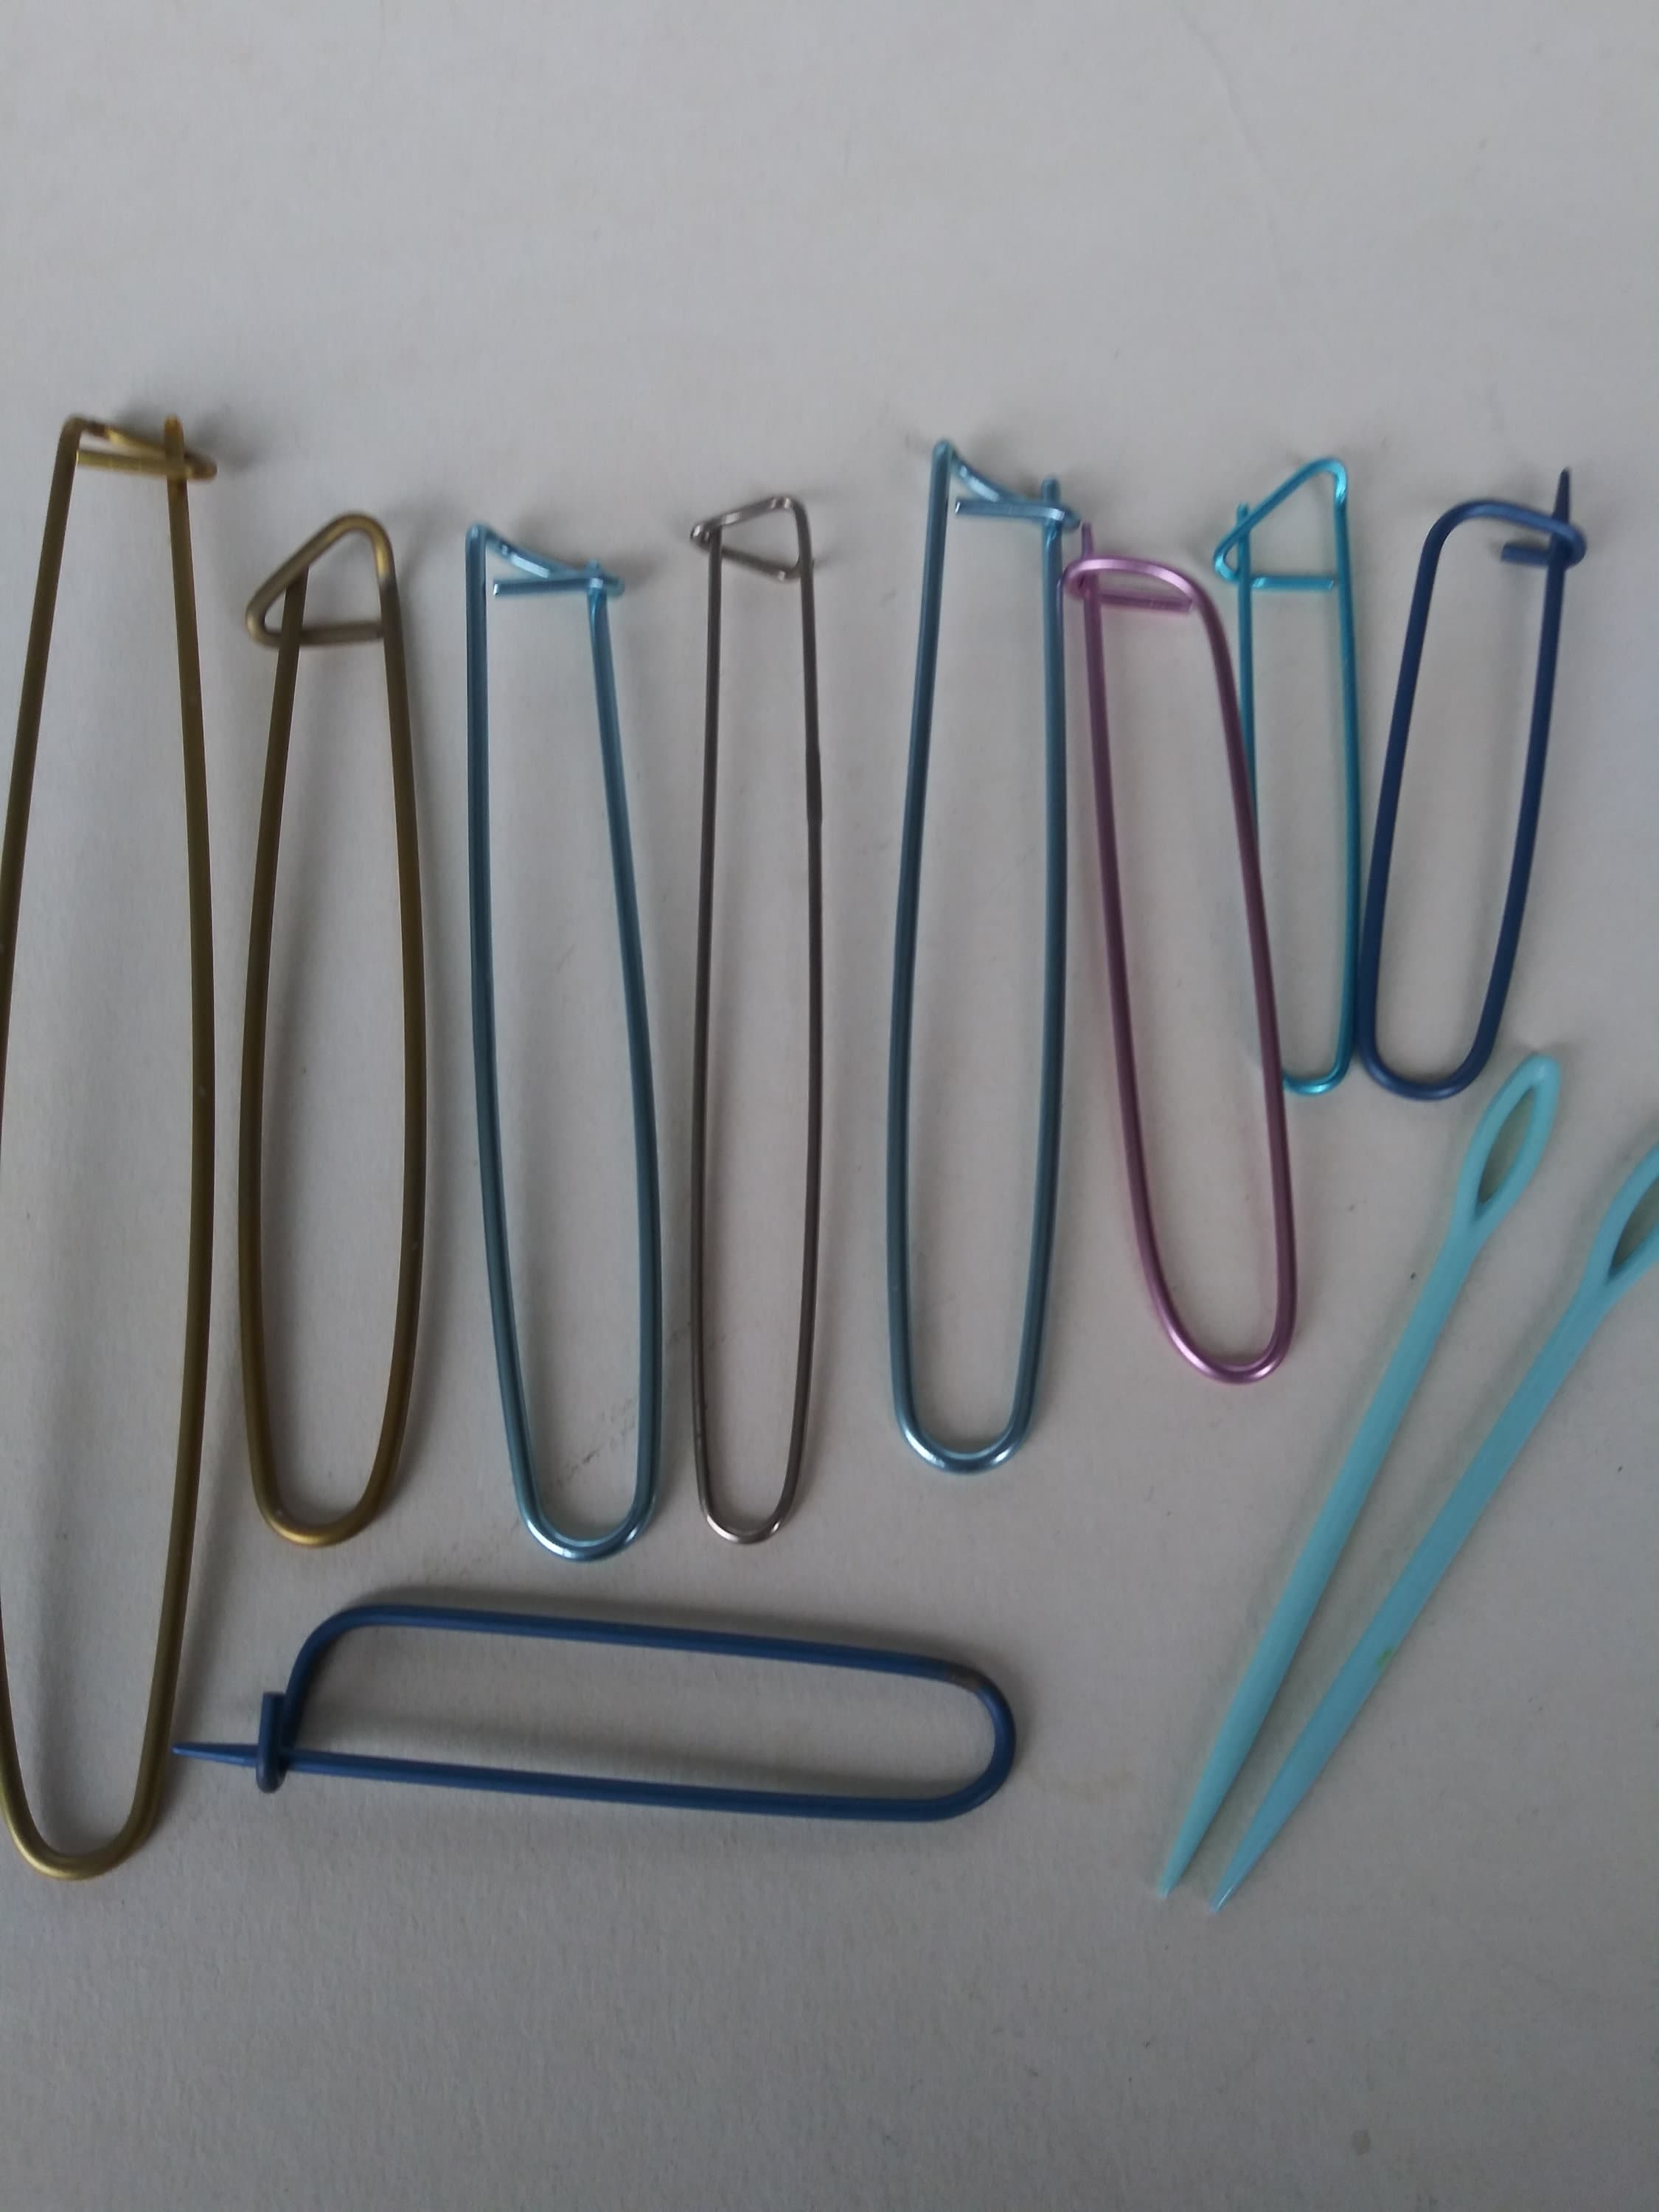 Plastic Sewing Needles for Knitting ,2 Sizes, 20 Pcs, Tapestry Needles, Yarn  Needle for Crocheting, Darning Needles 